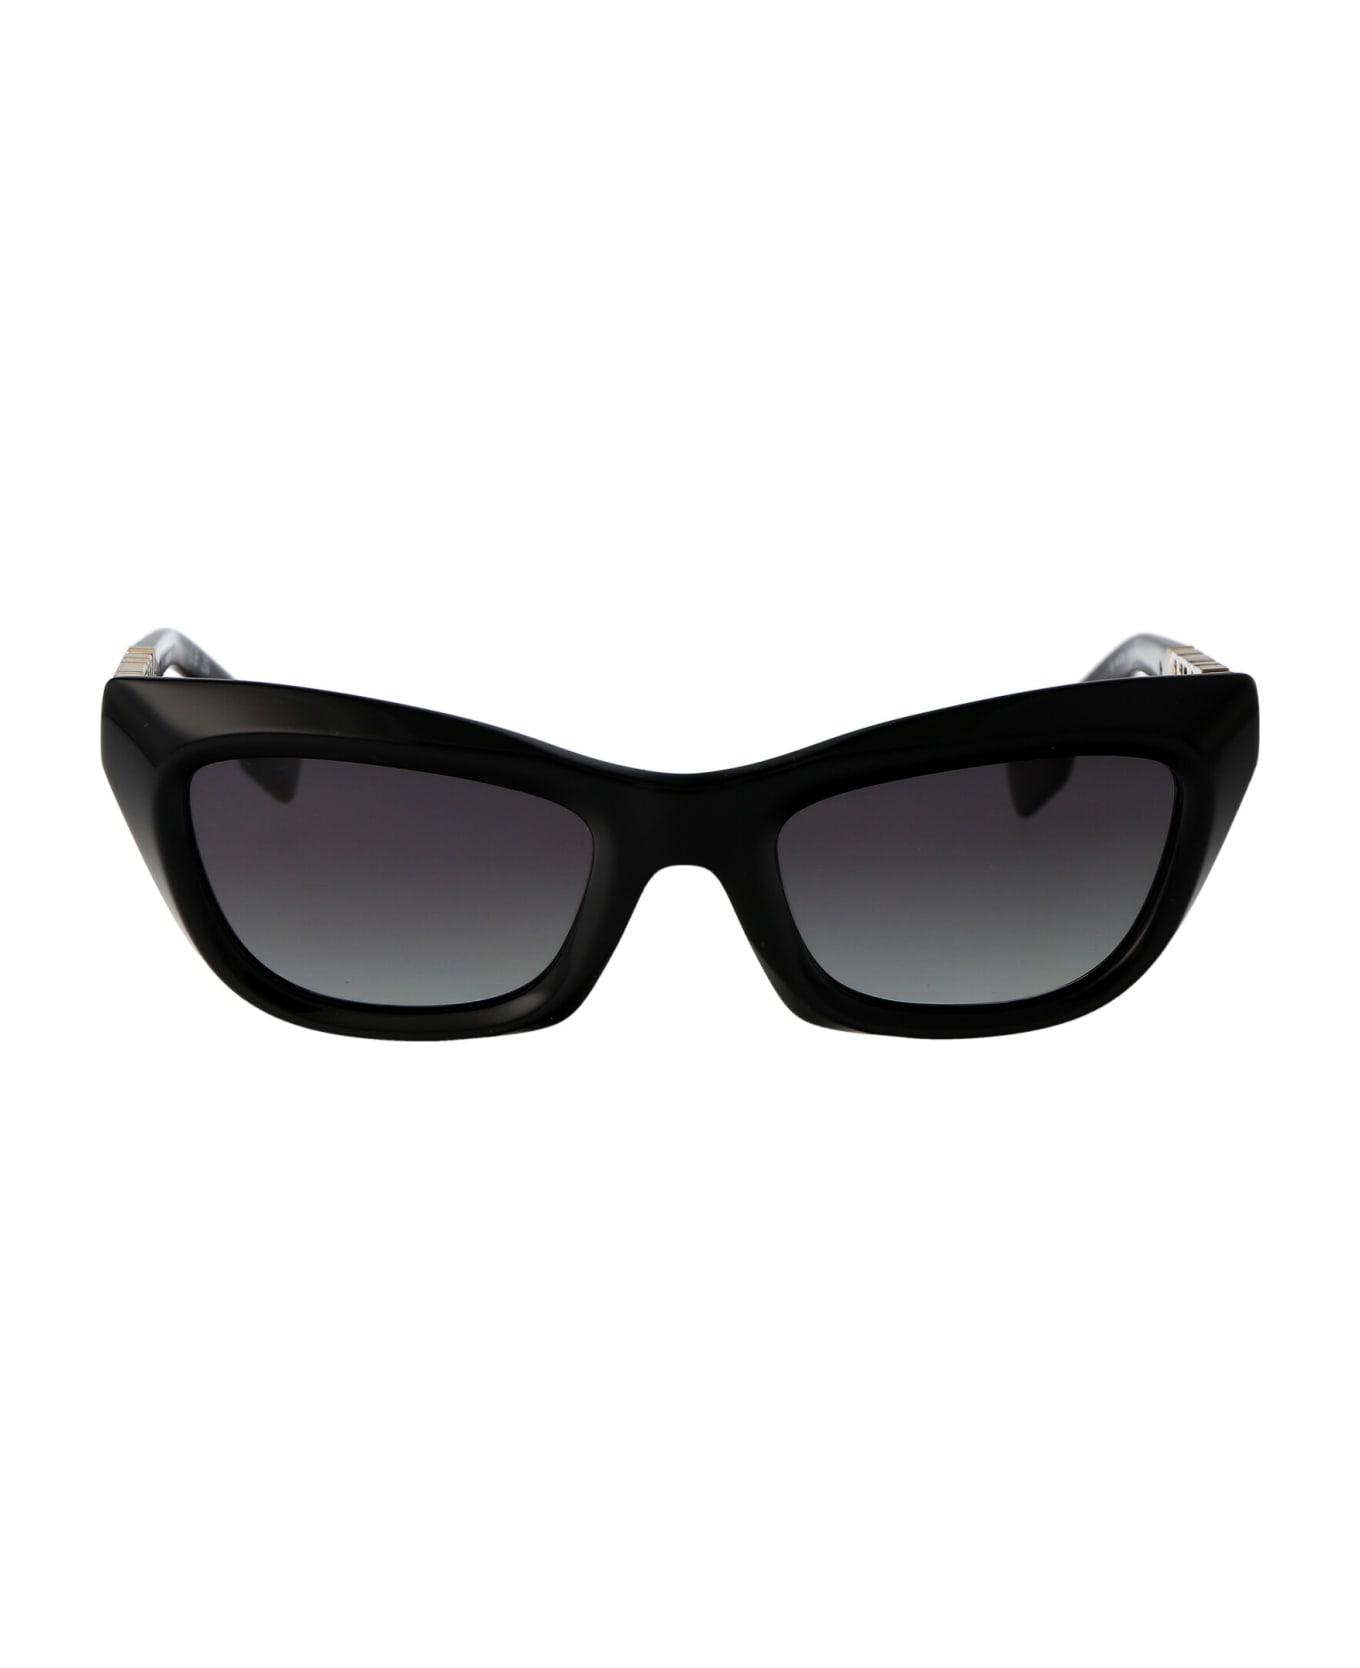 Burberry Eyewear 0be4409 Sunglasses - 30018G BLACK